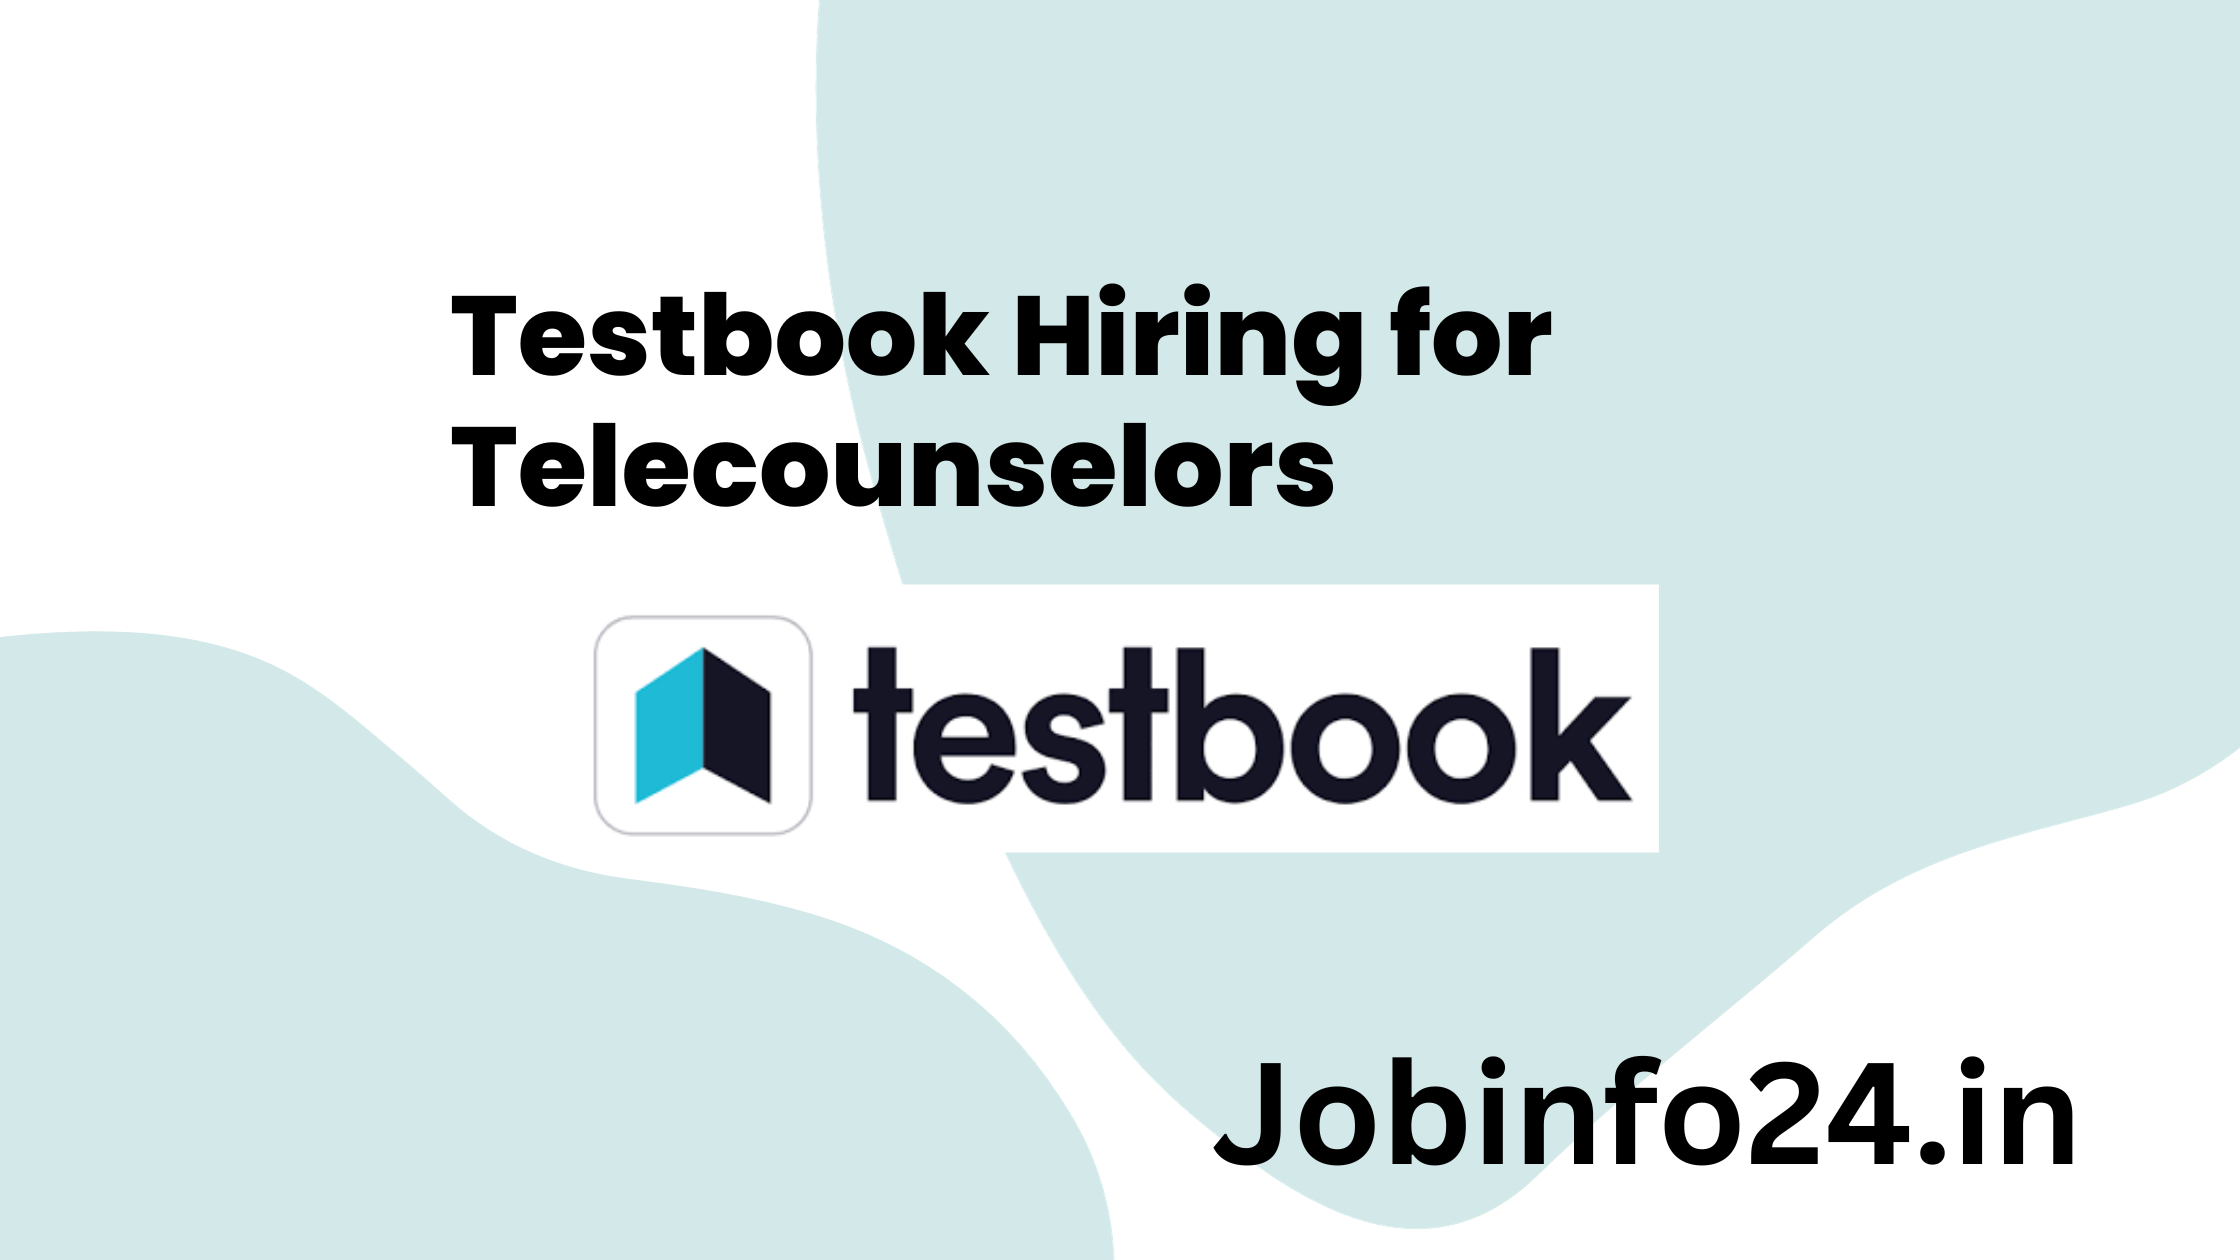 Testbook Hiring for Telecounselors